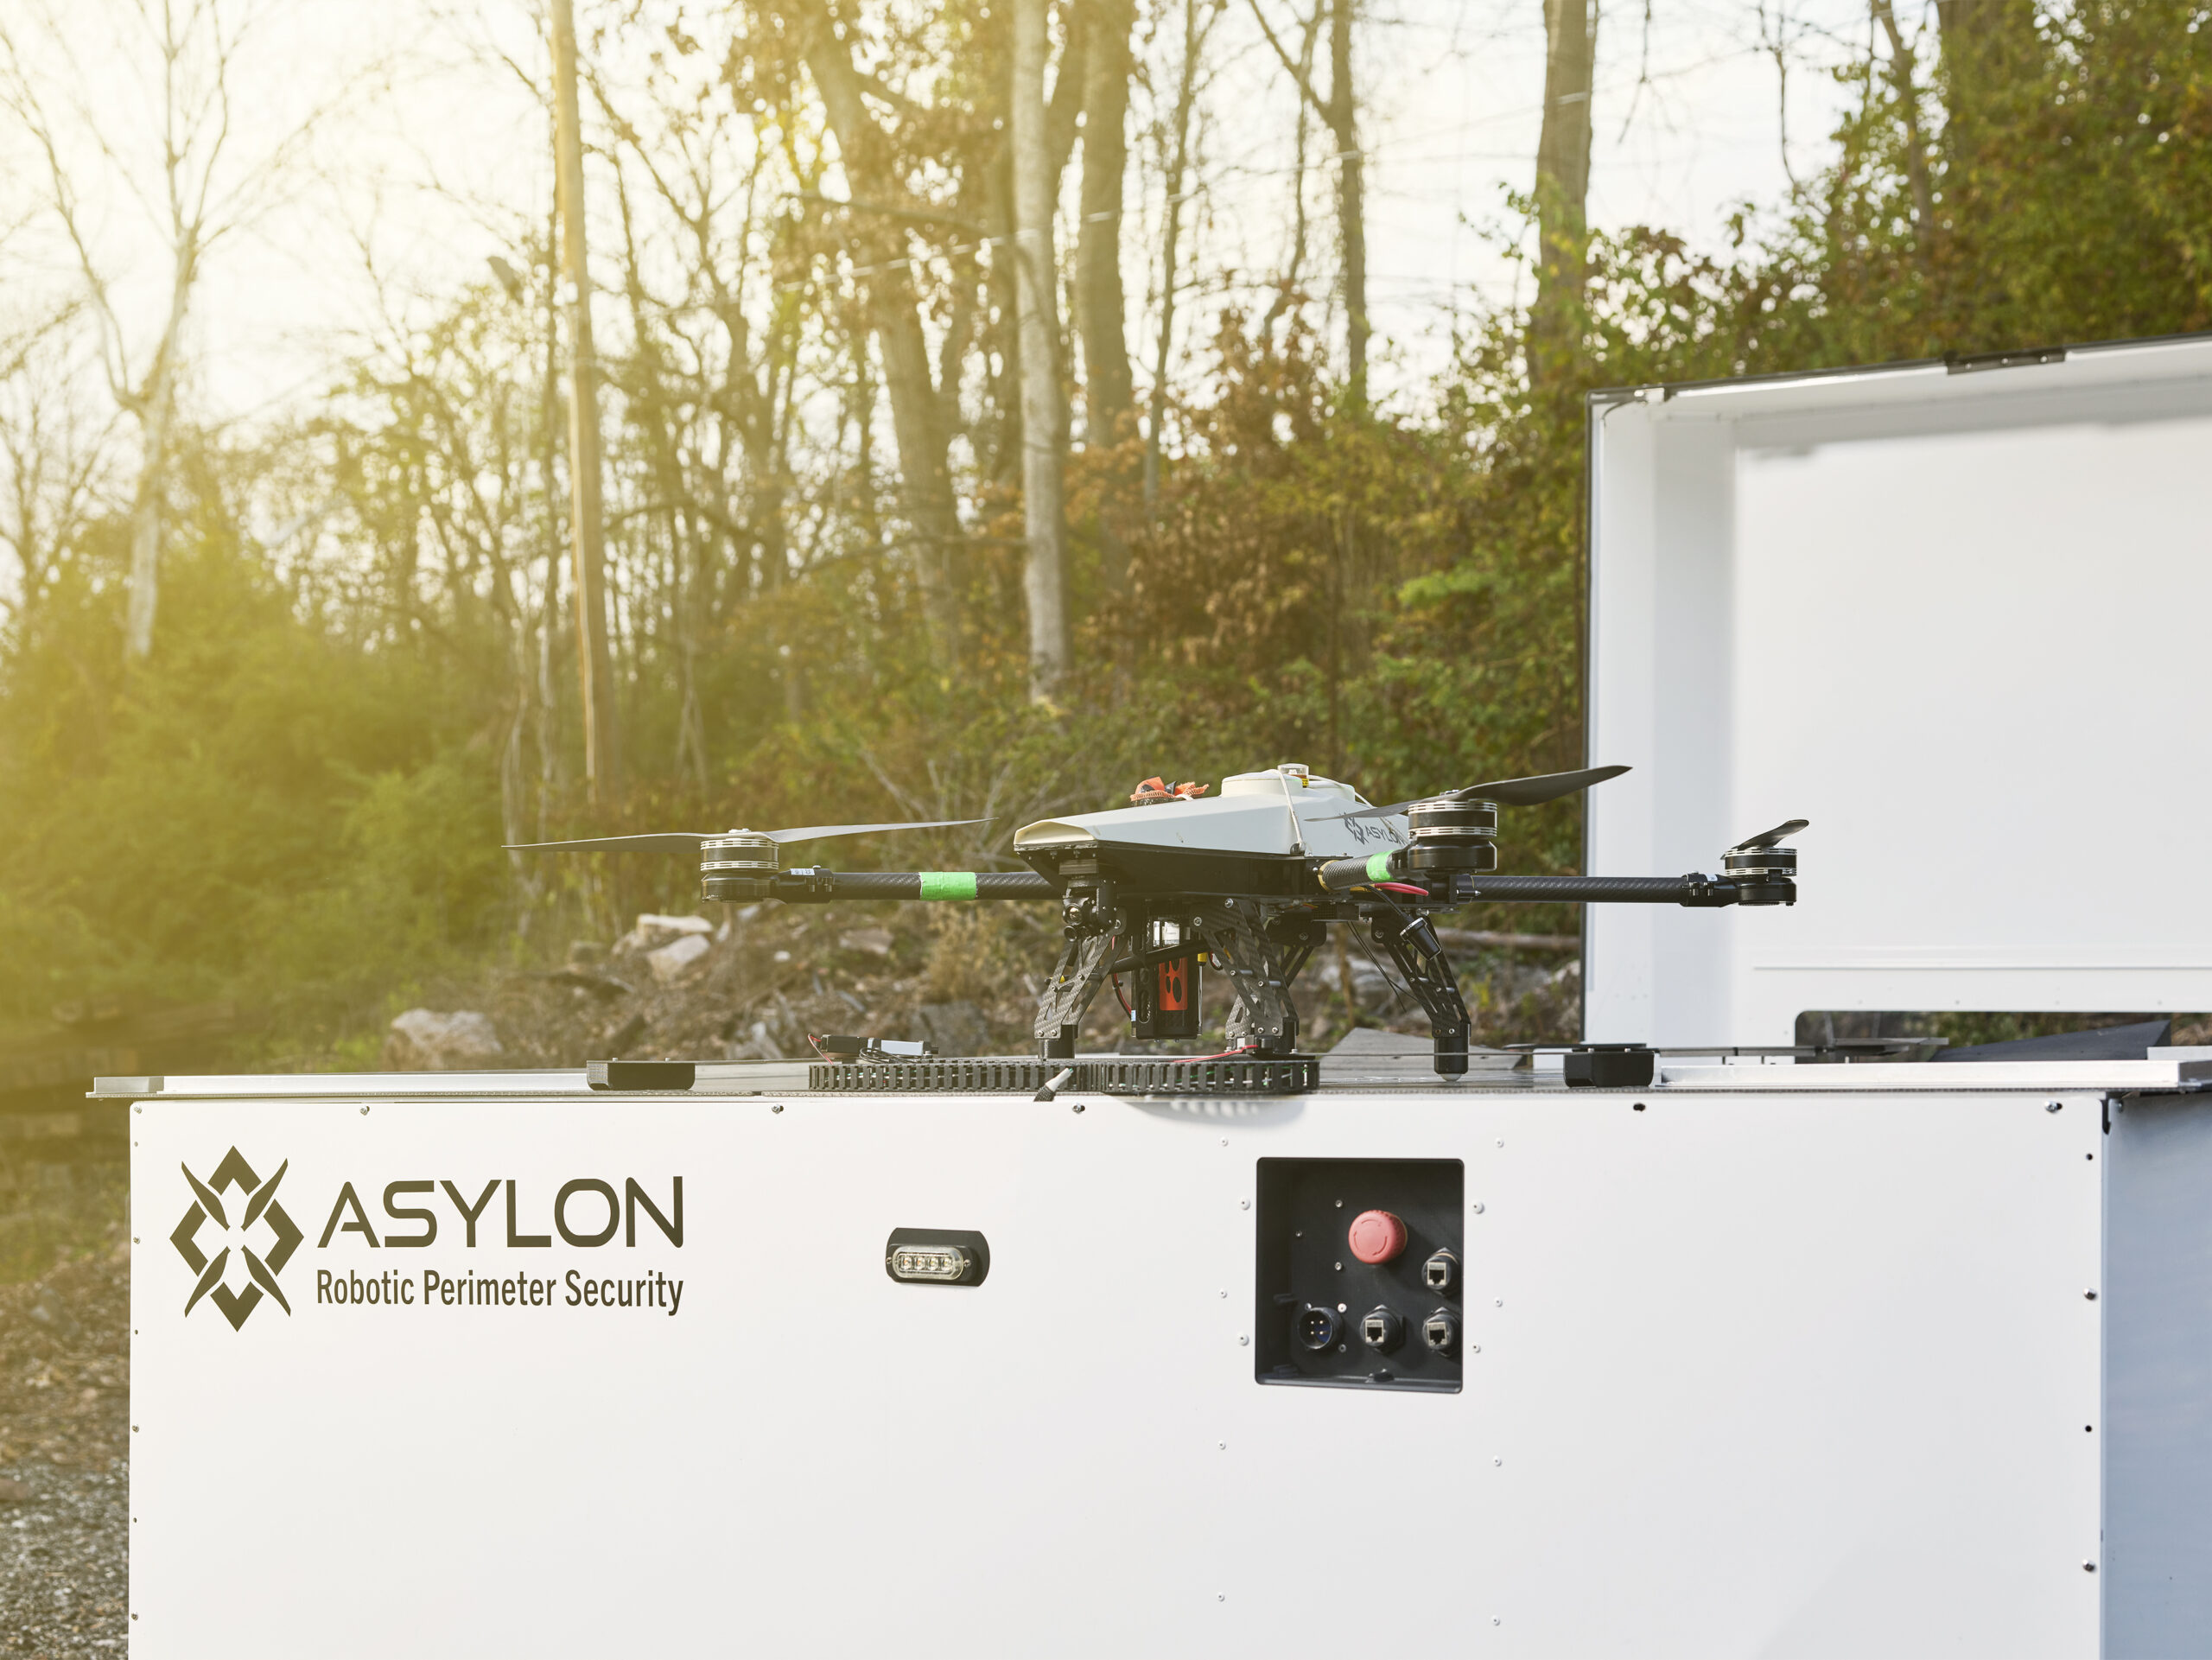 Asylon-drone-in-a-box-system